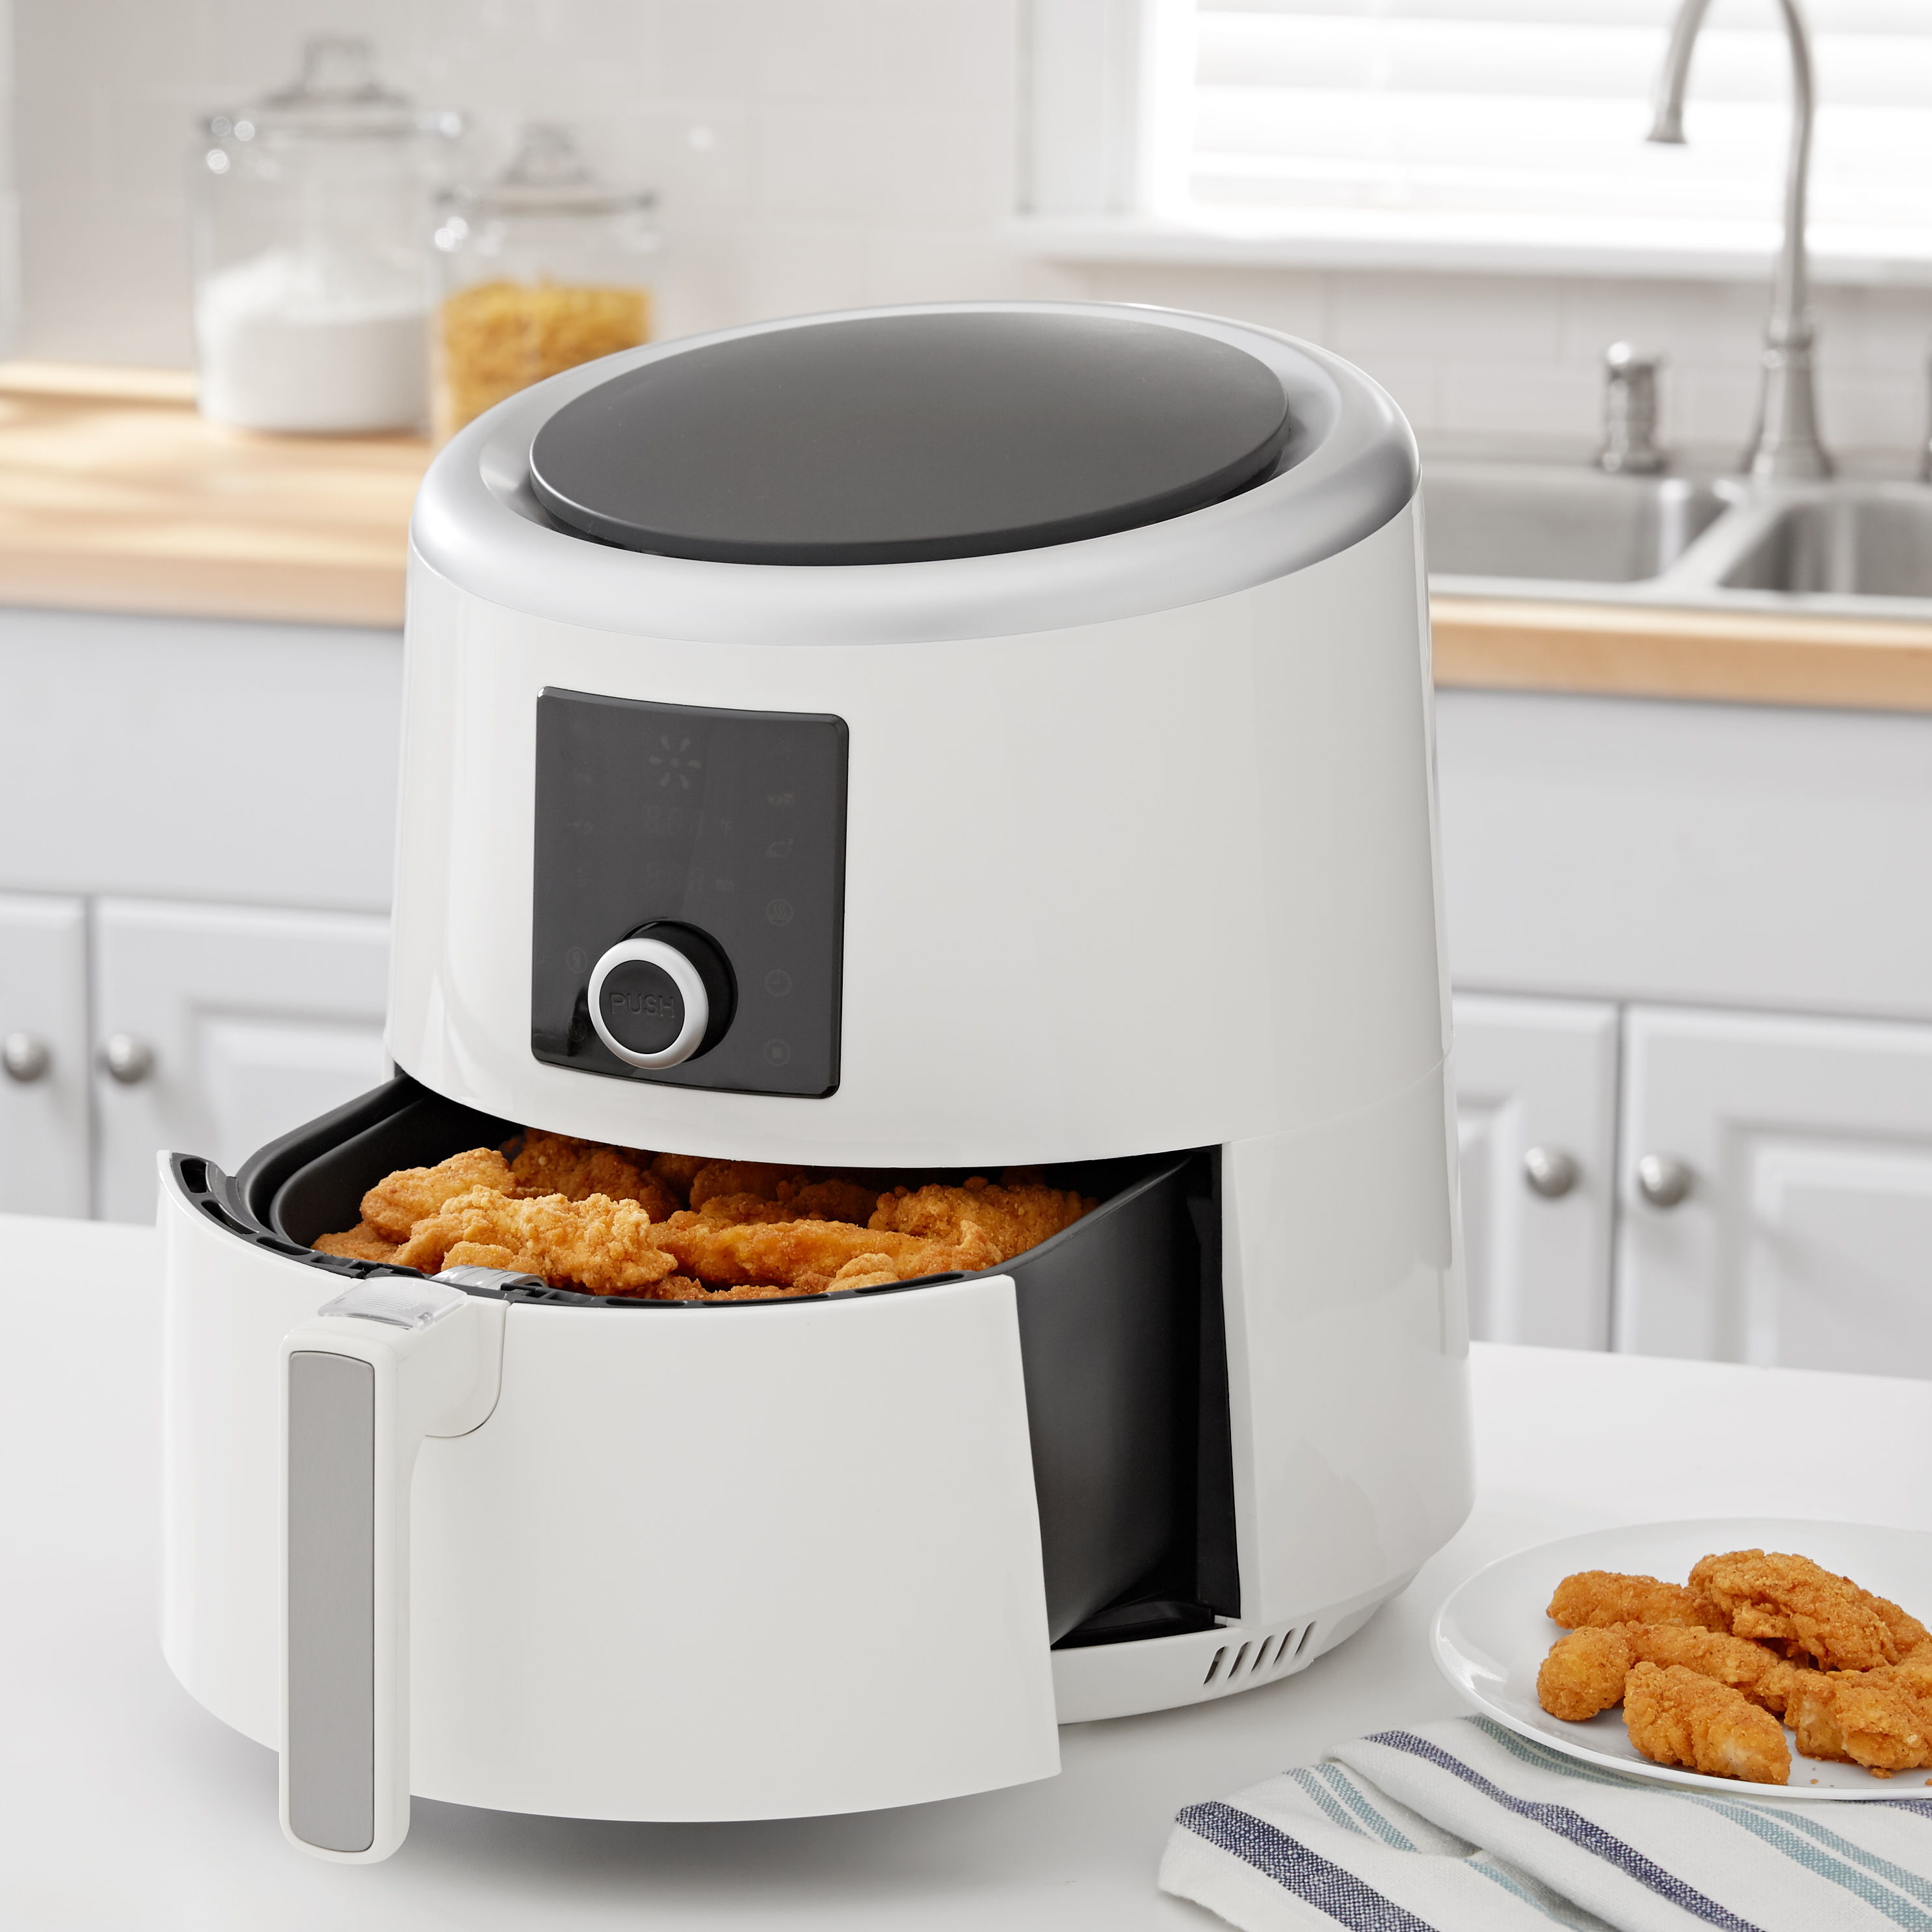 La Gourmet 6 Quart Digital Air Fryer and Convection Oven Only $39.00! (Reg $89.00)